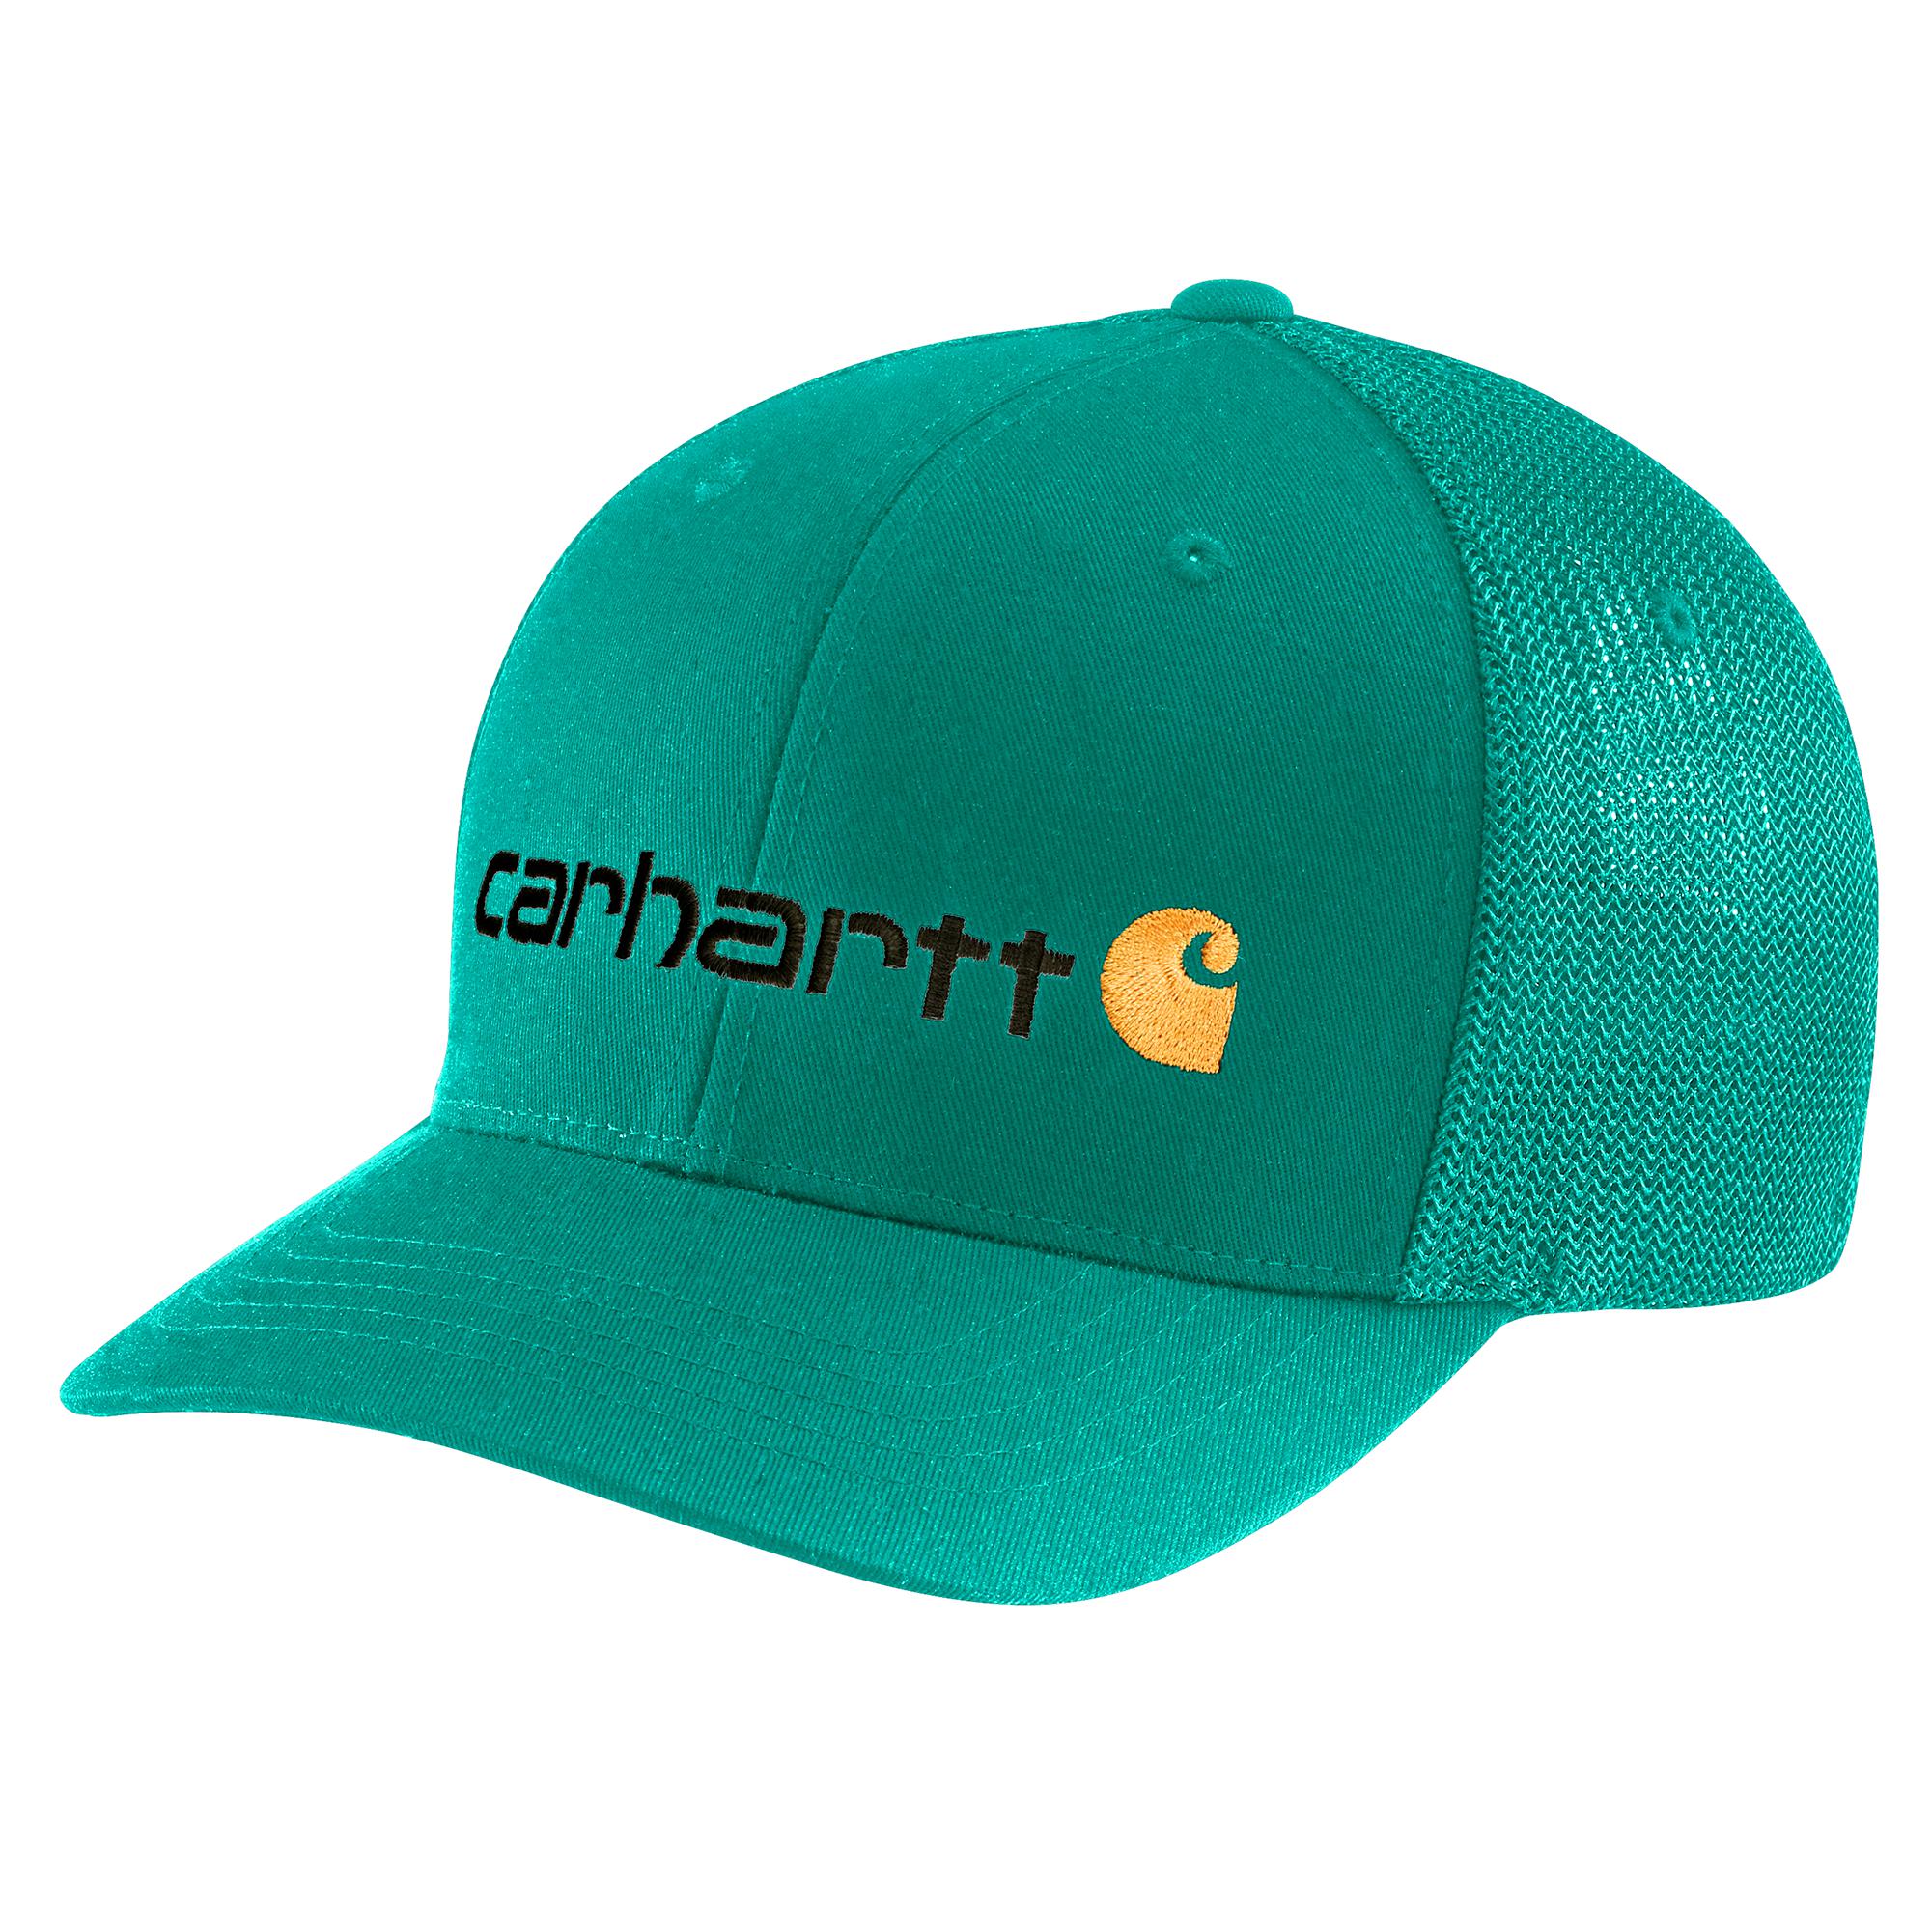 'Carhartt' Men's Rugged Flex Fitted Canvas Mesh-Back Logo Graphic Cap - Cadmium Green